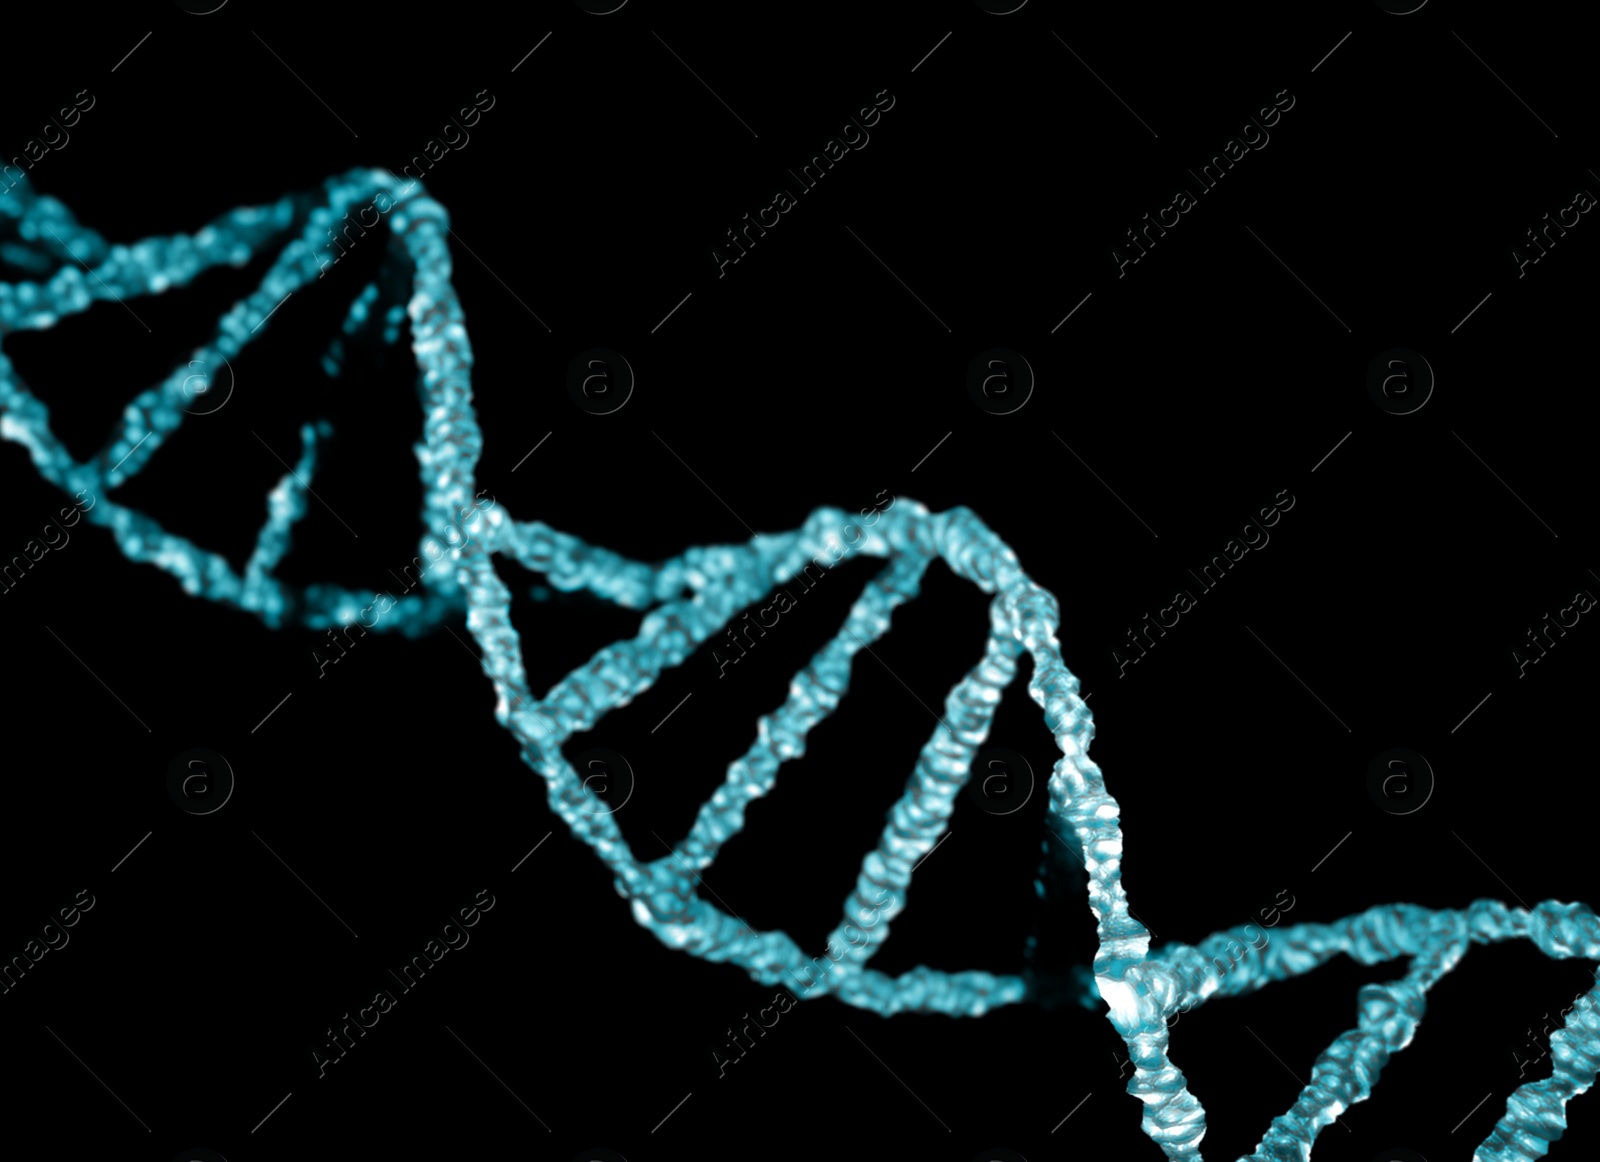 Illustration of Structure of DNA on dark background. Illustration